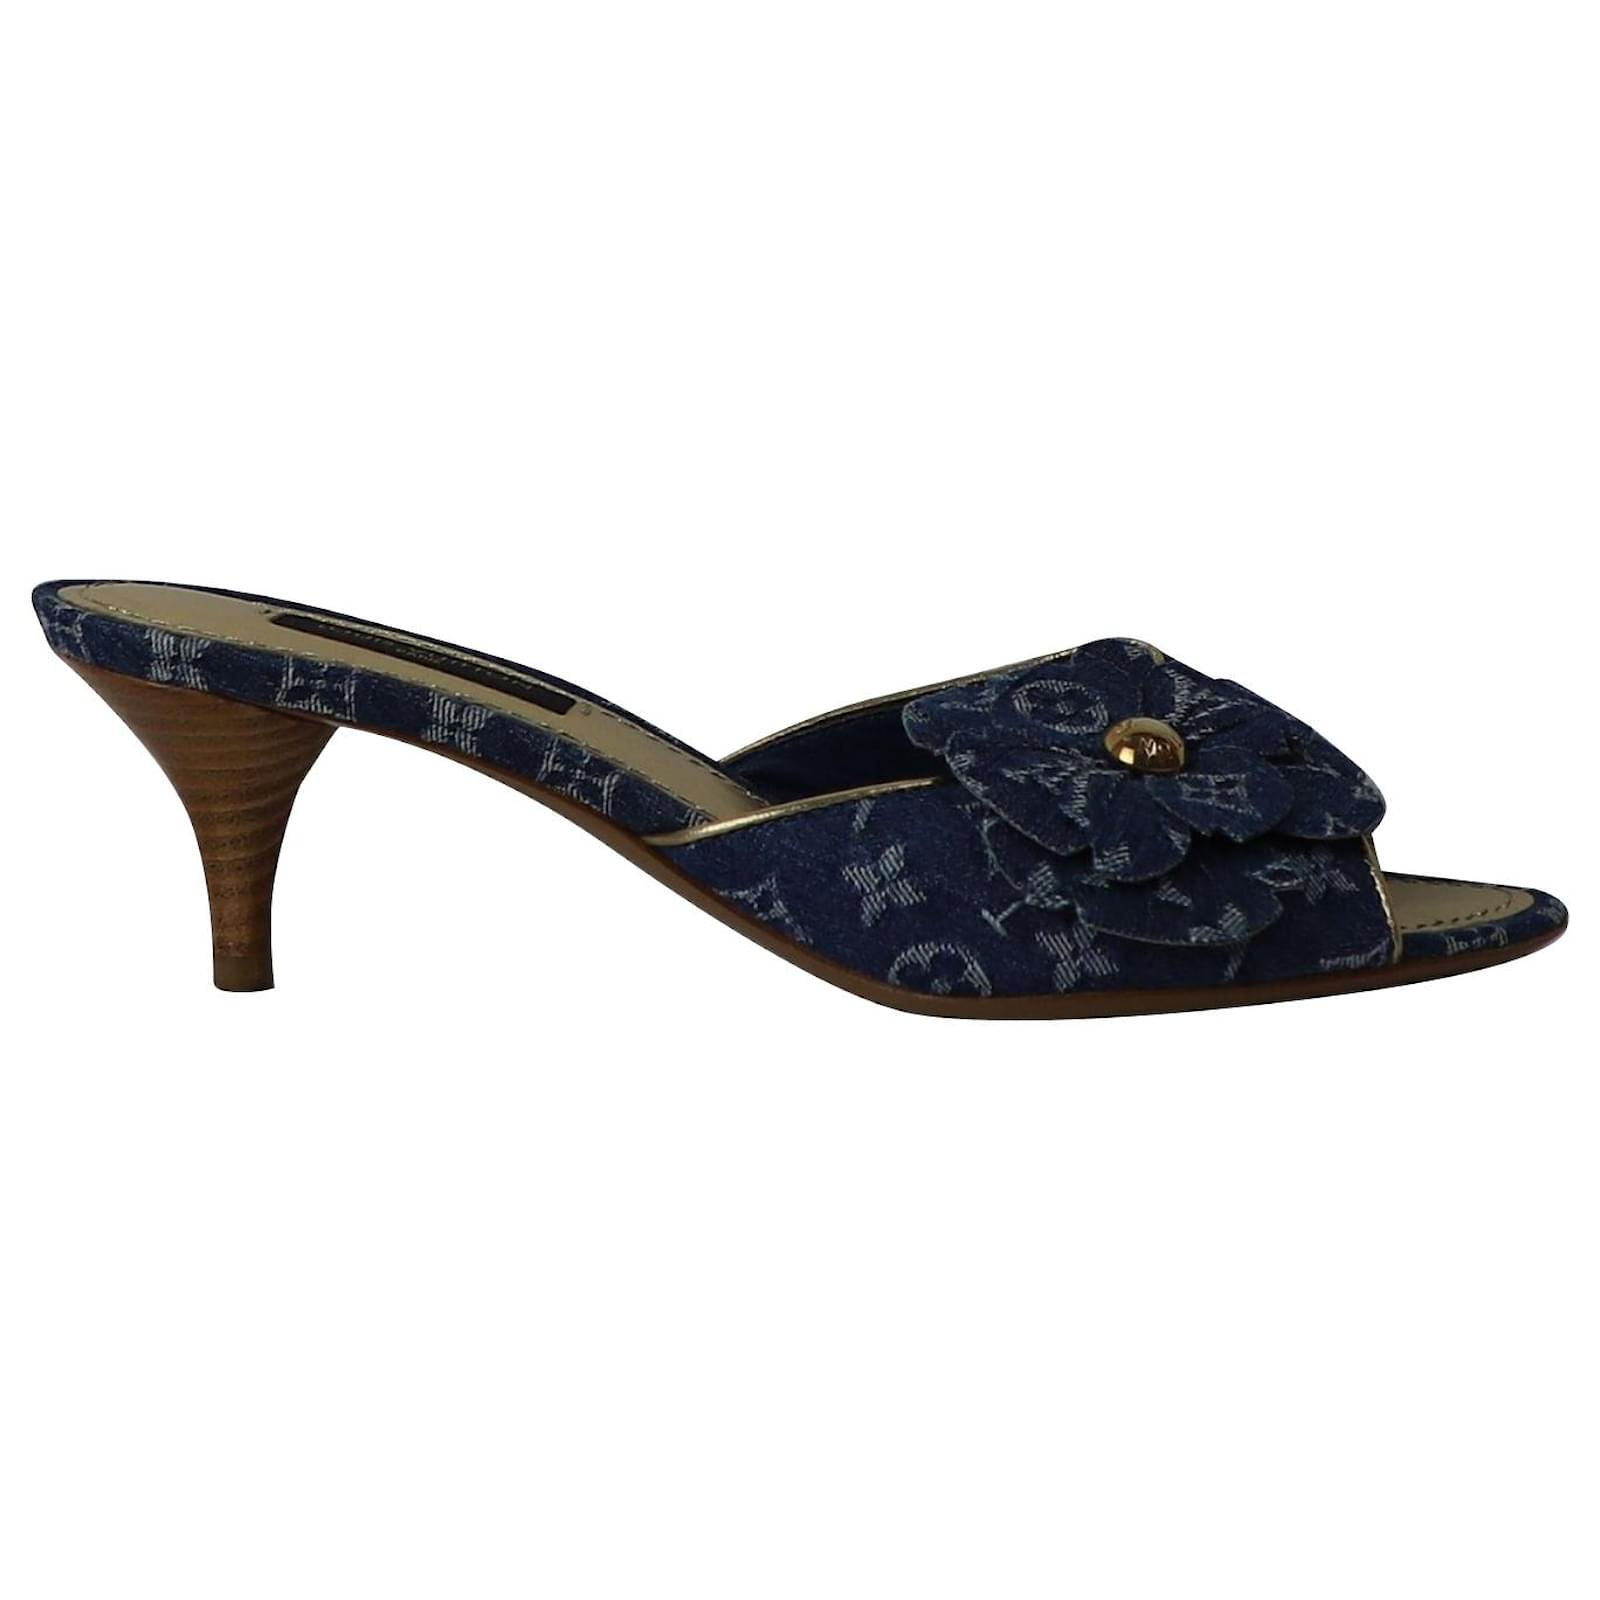 Louis Vuitton Freesia Slide Sandals in Blue Monogram Denim Cotton